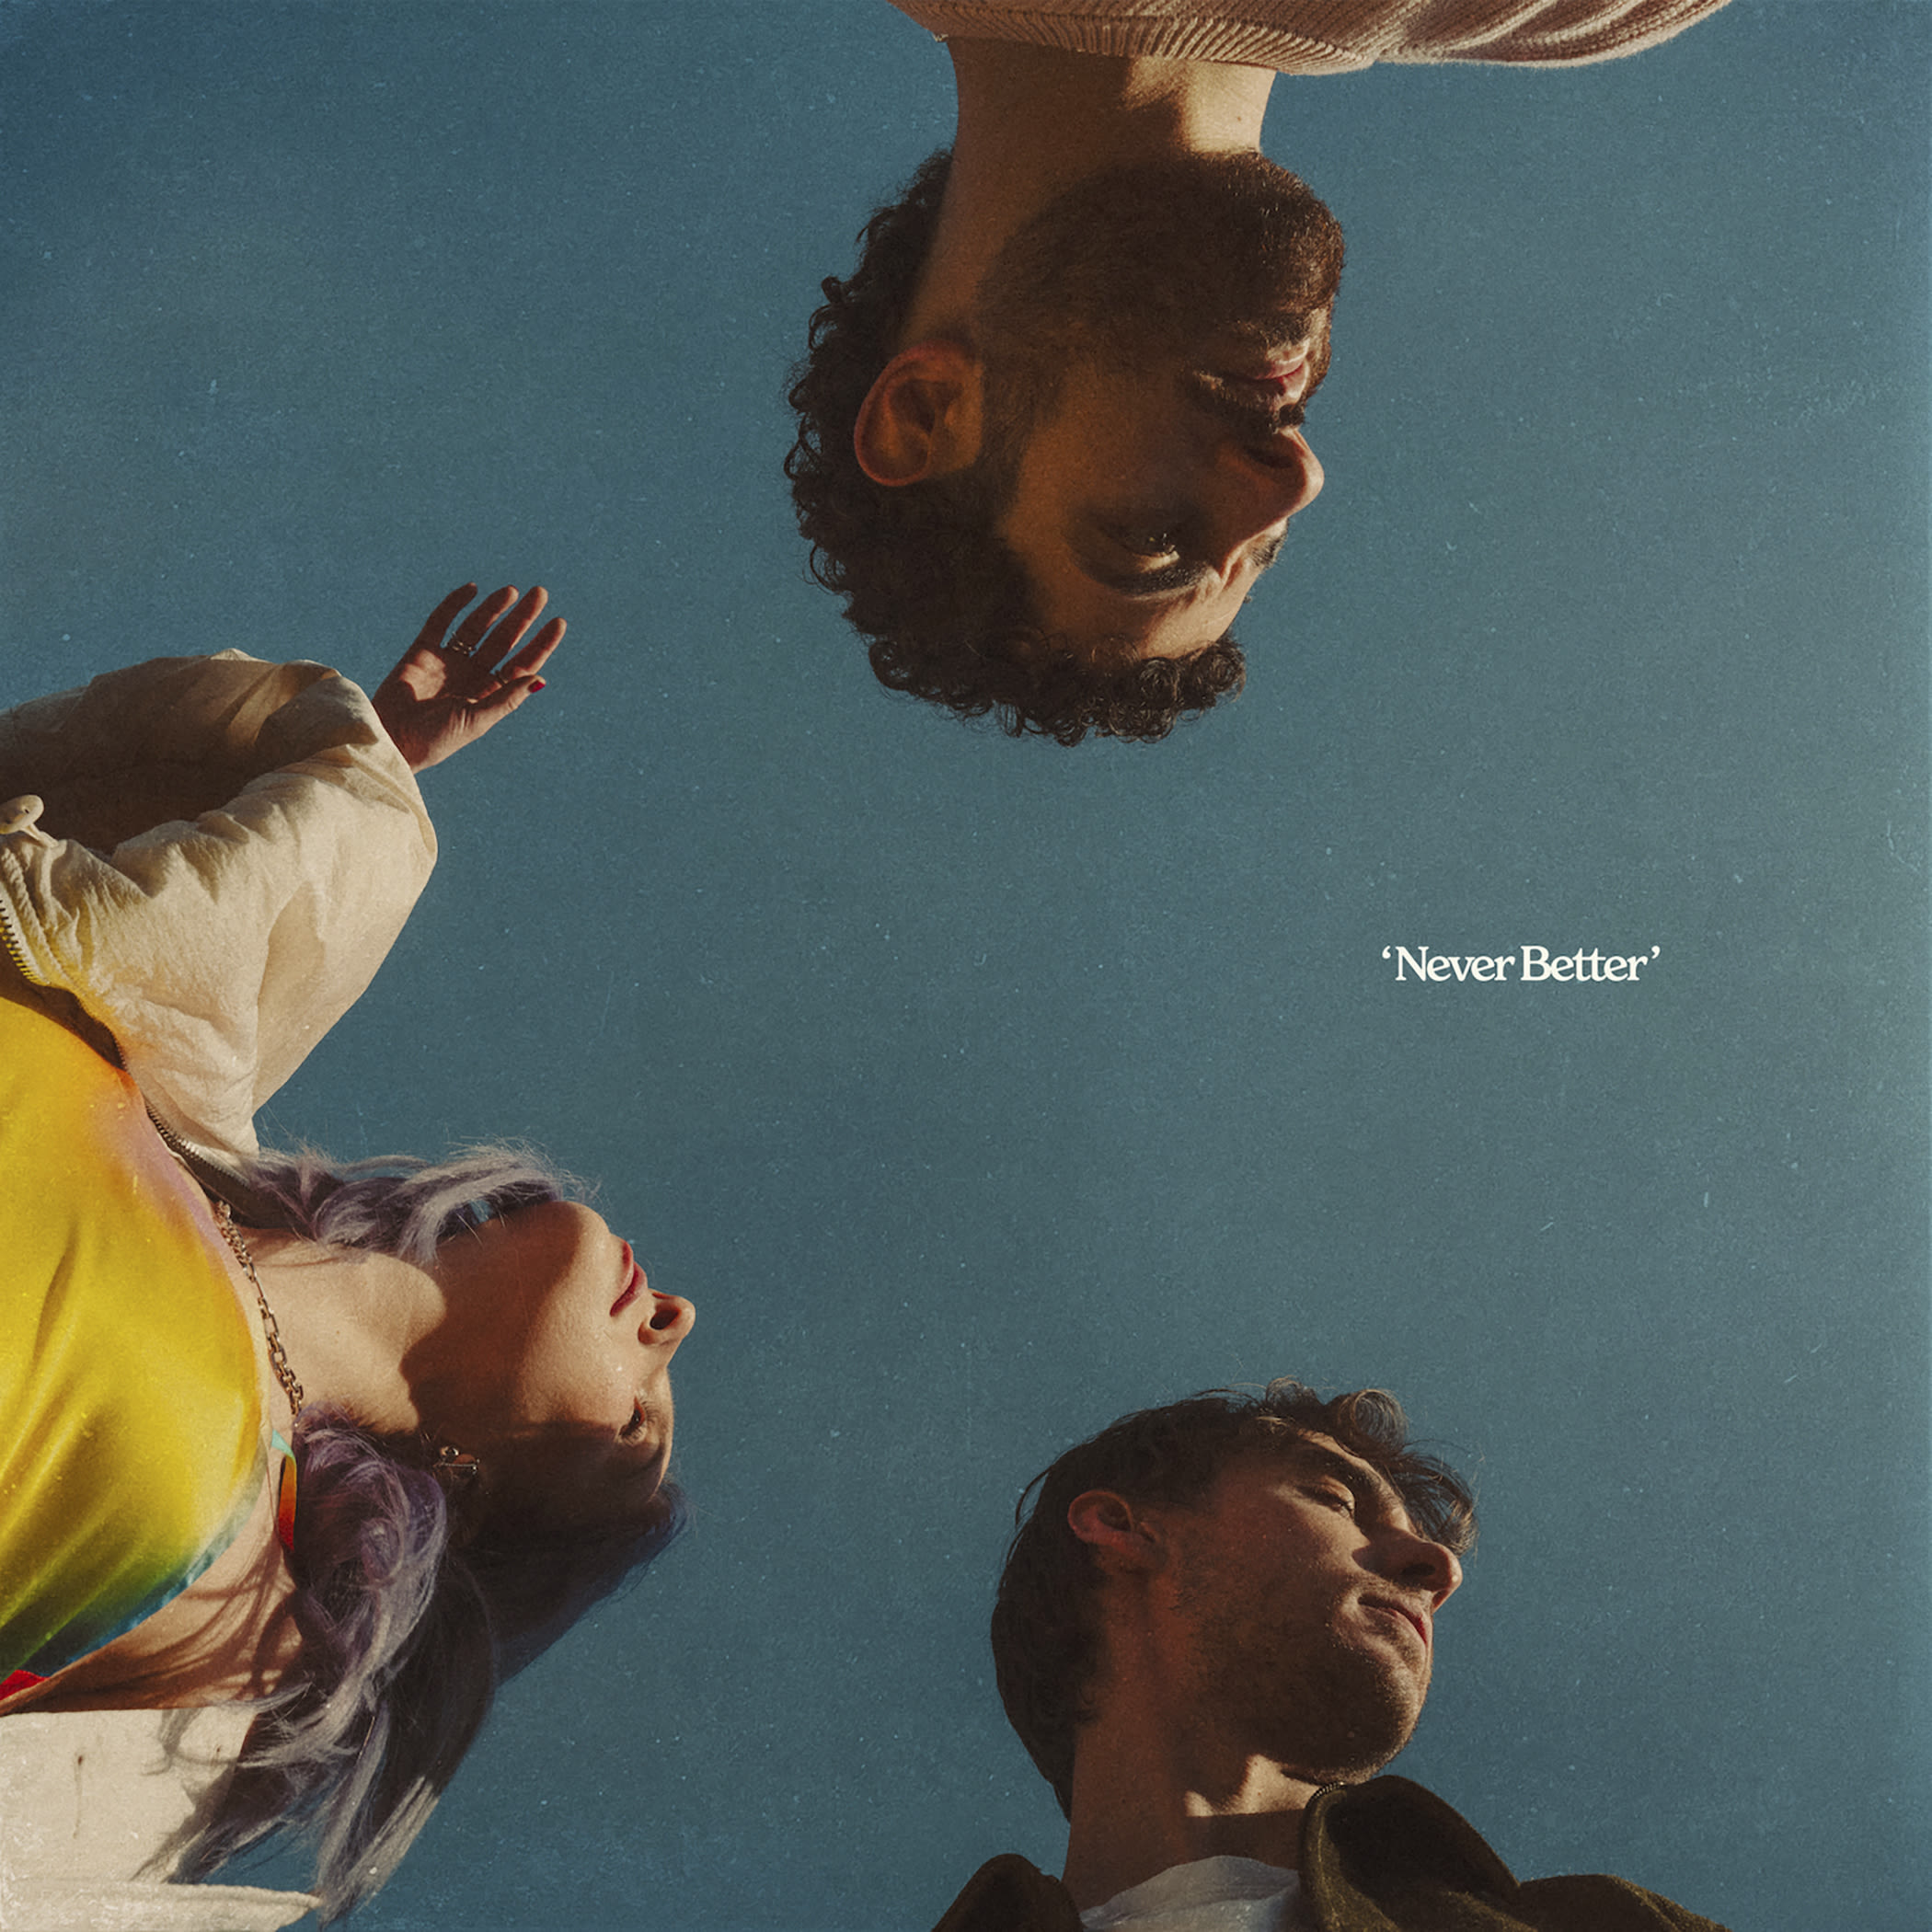 Music Review: Canadian trio Wild Rivers' elegant harmonies soar on new album, 'Never Better'